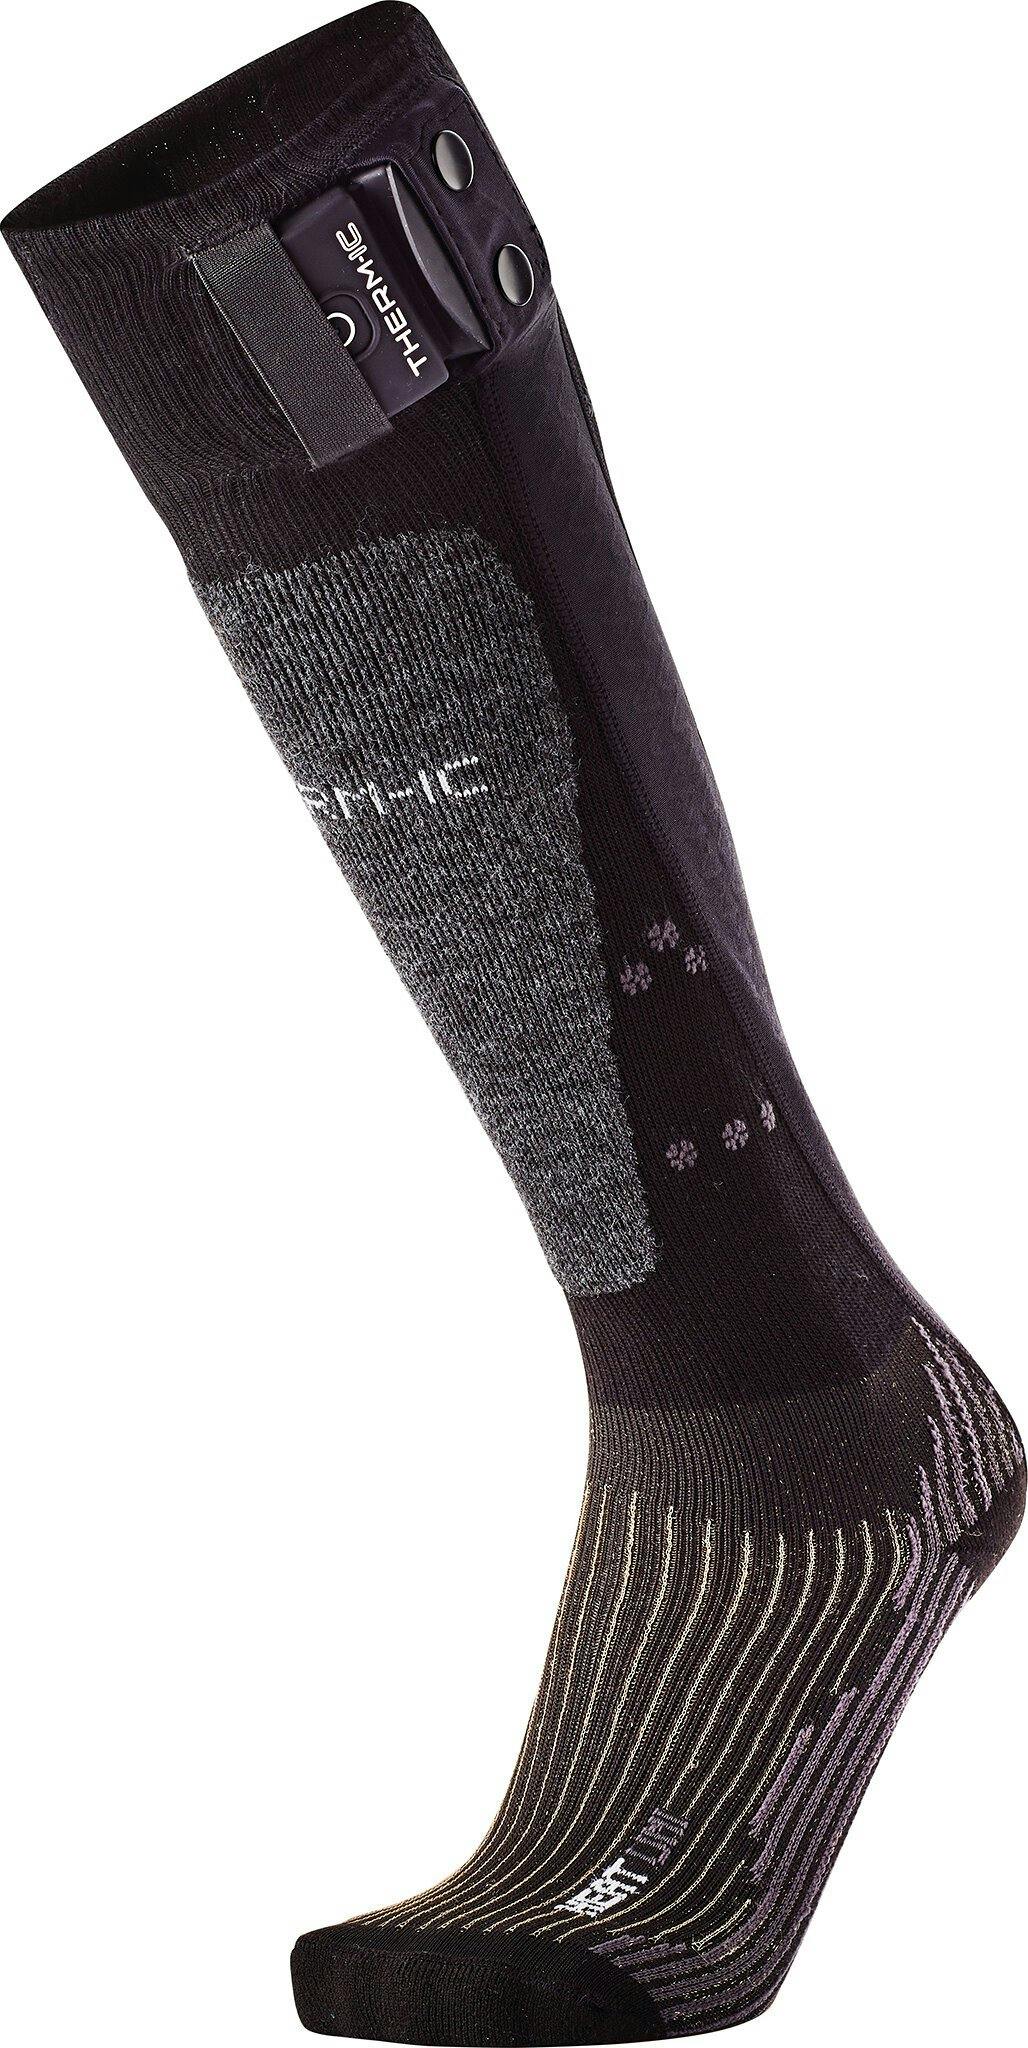 Product image for Powersocks Heat Uni V2 Heated Socks - Unisex